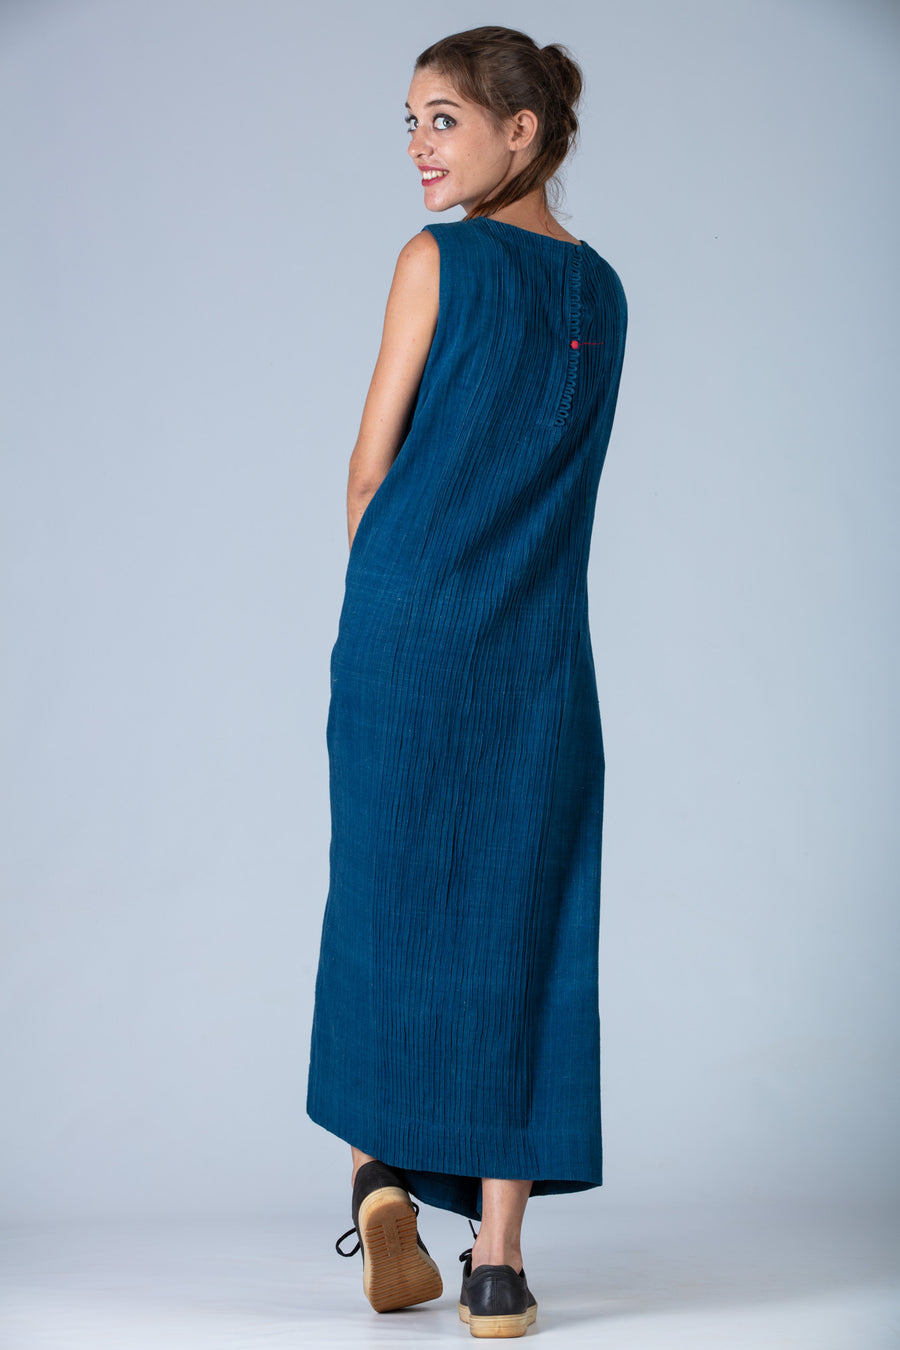 Natural Indigo Cotton Dress - NIKITA - Upasana Design Studio